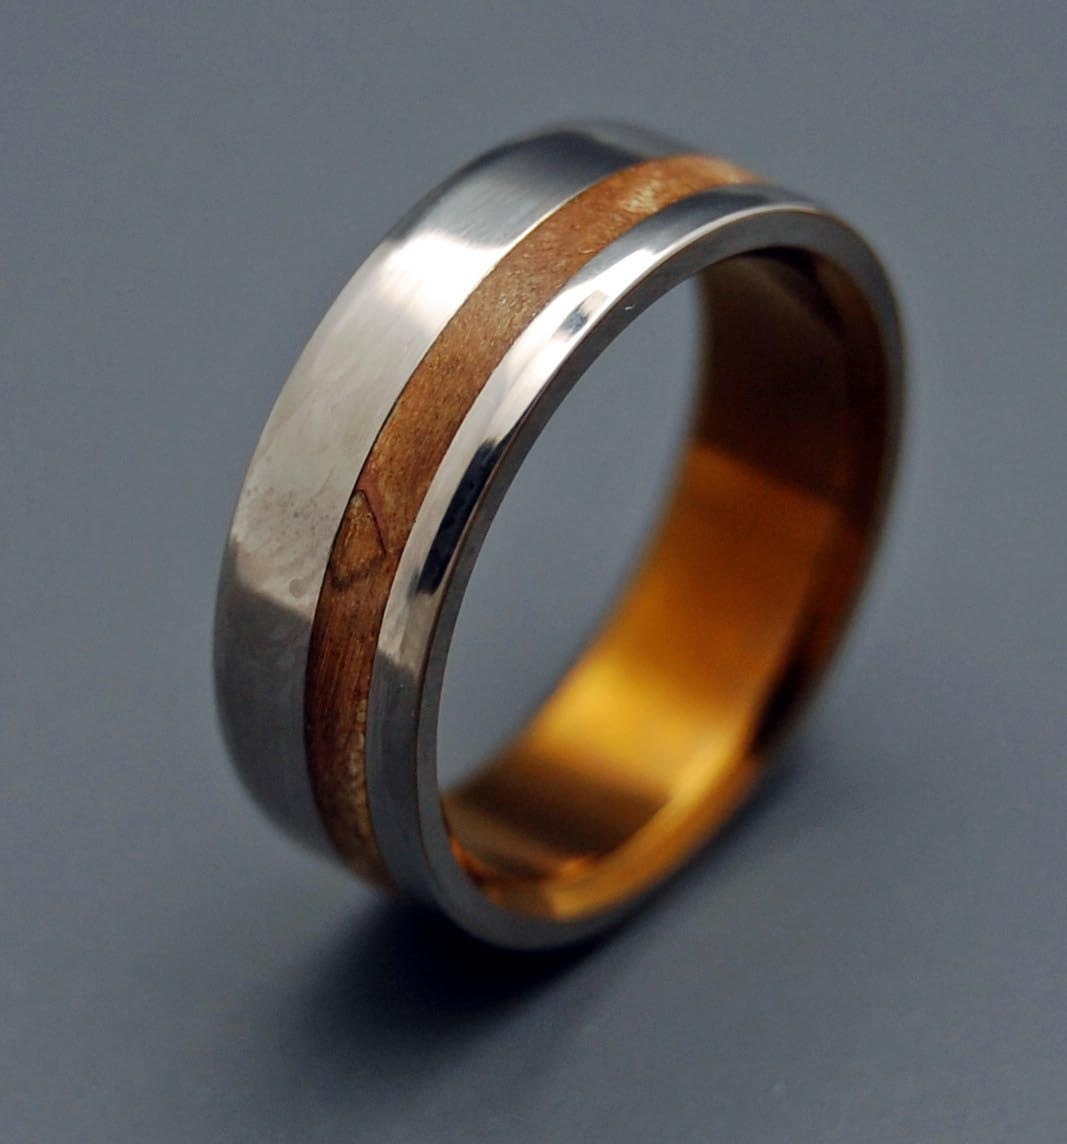 Silver Faun Wooden Wedding Rings by MinterandRichterDes on